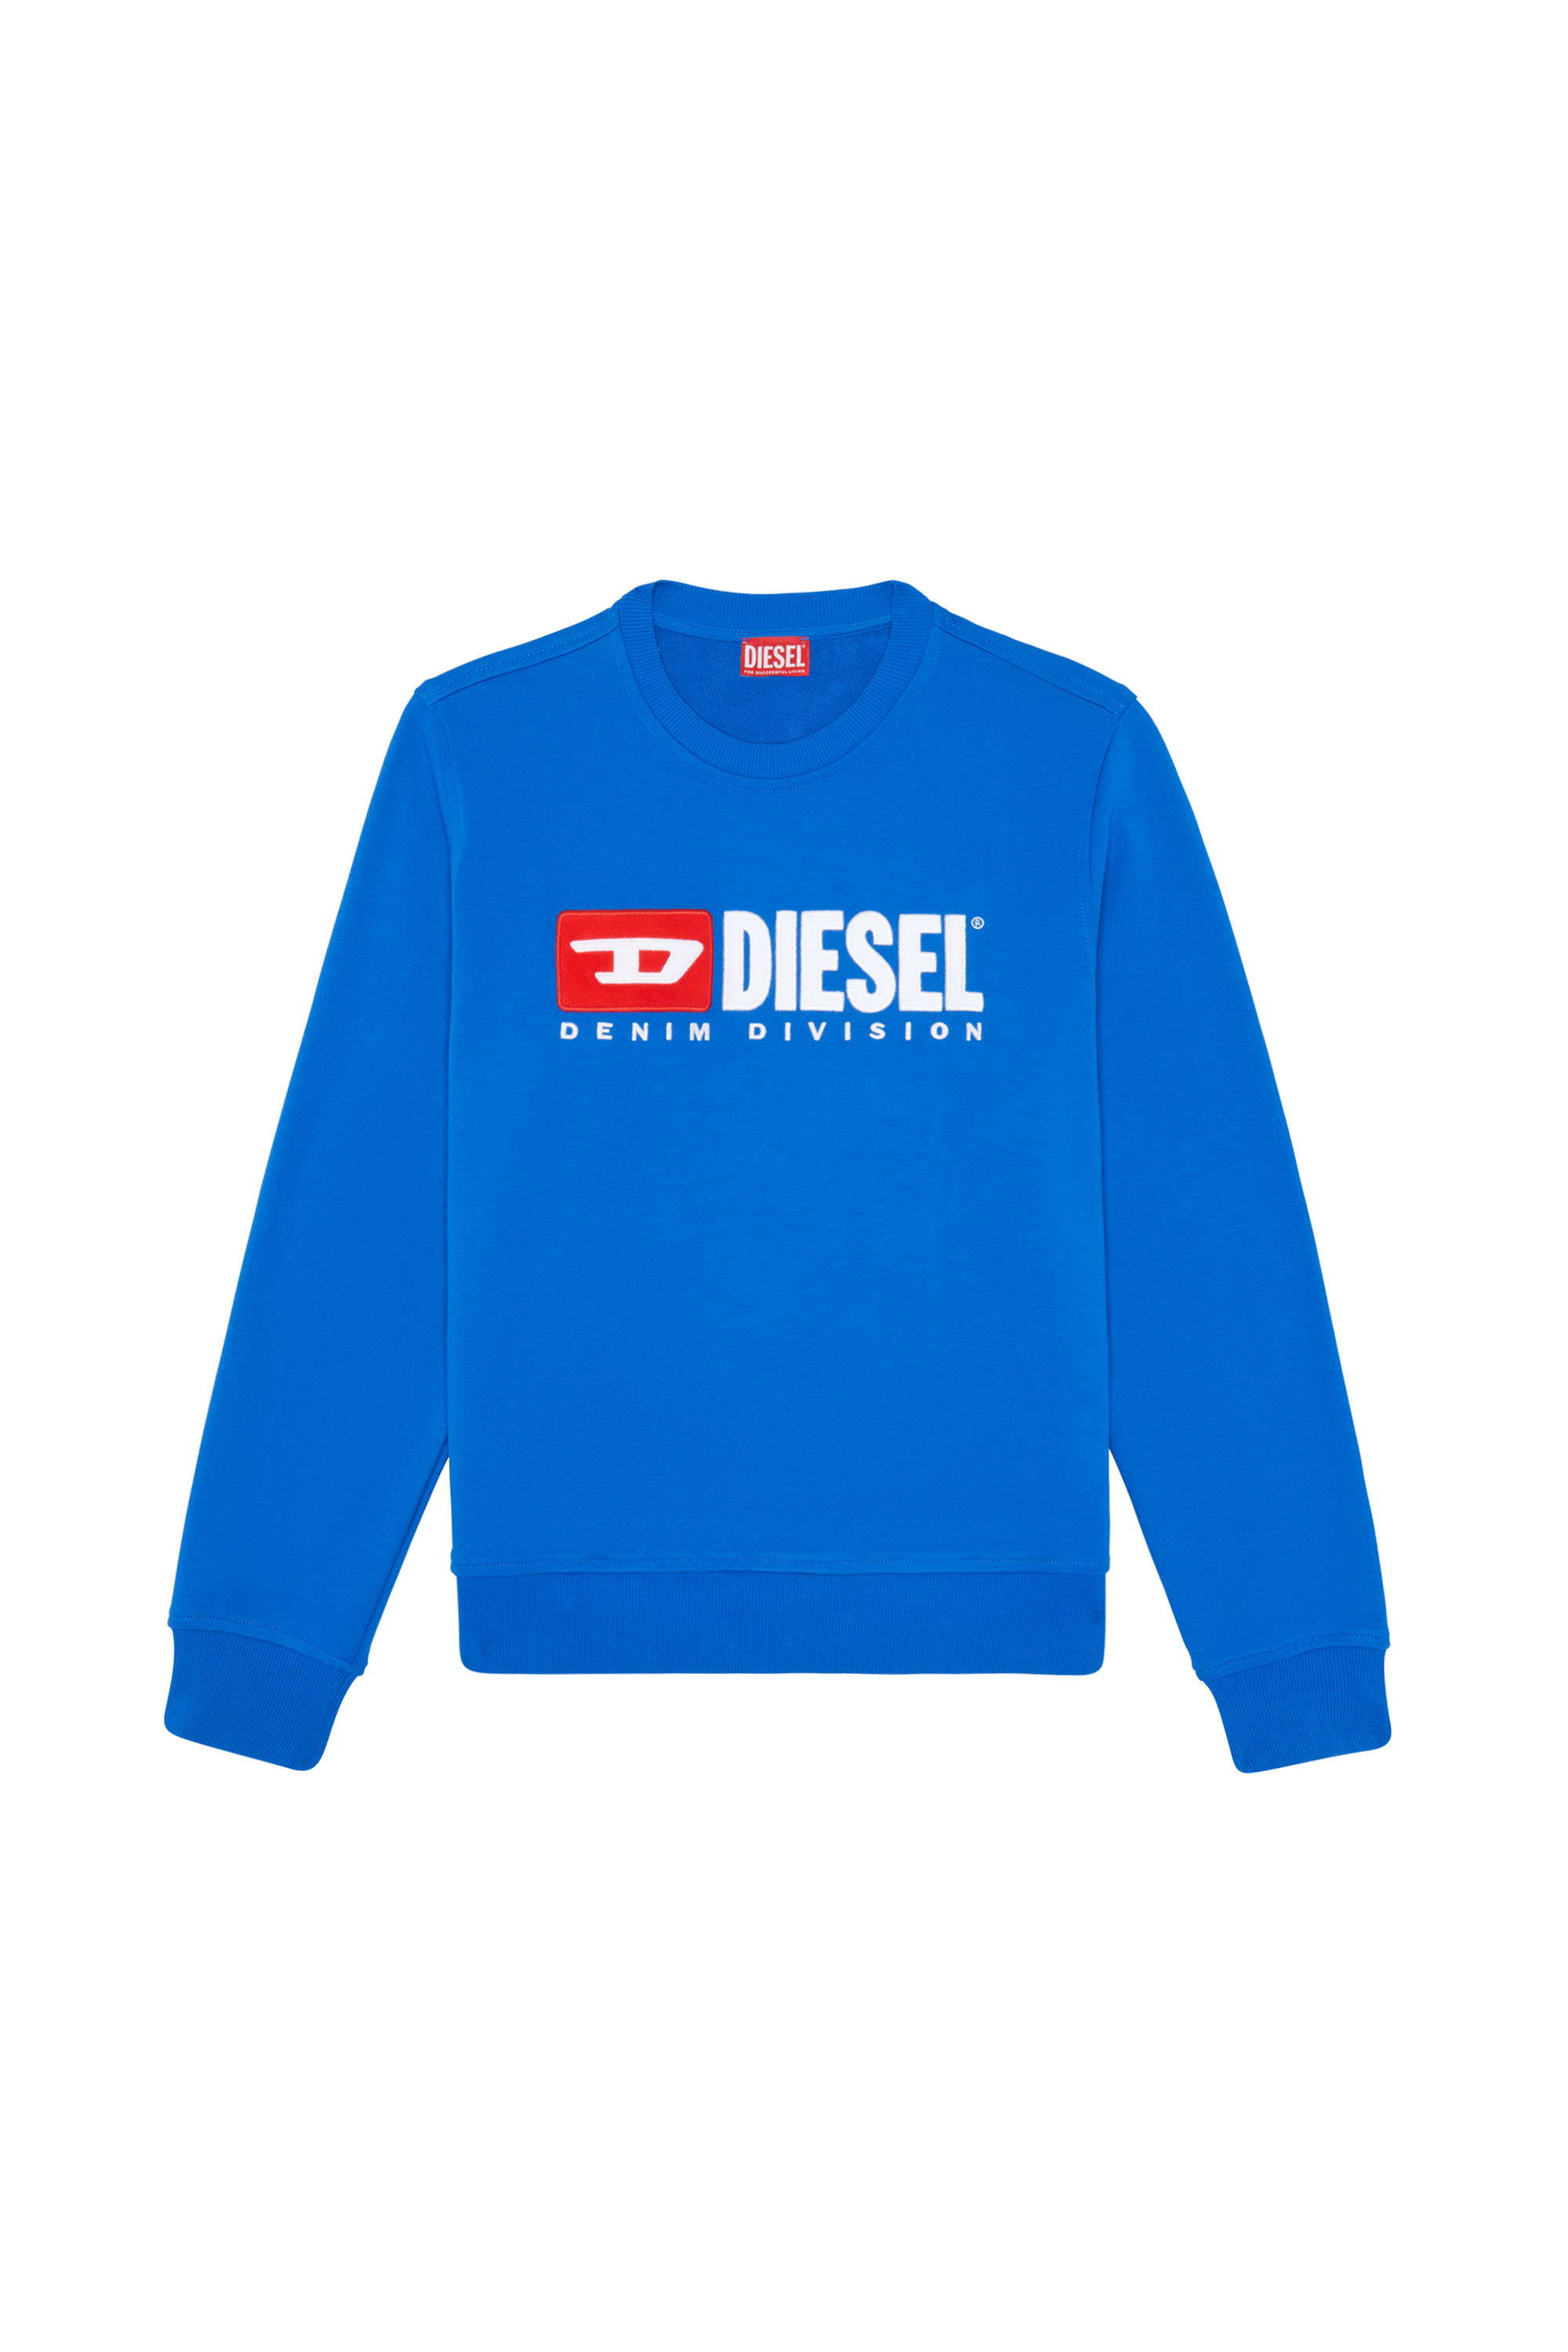 Diesel - S-GINN-DIV, Blue - Image 5